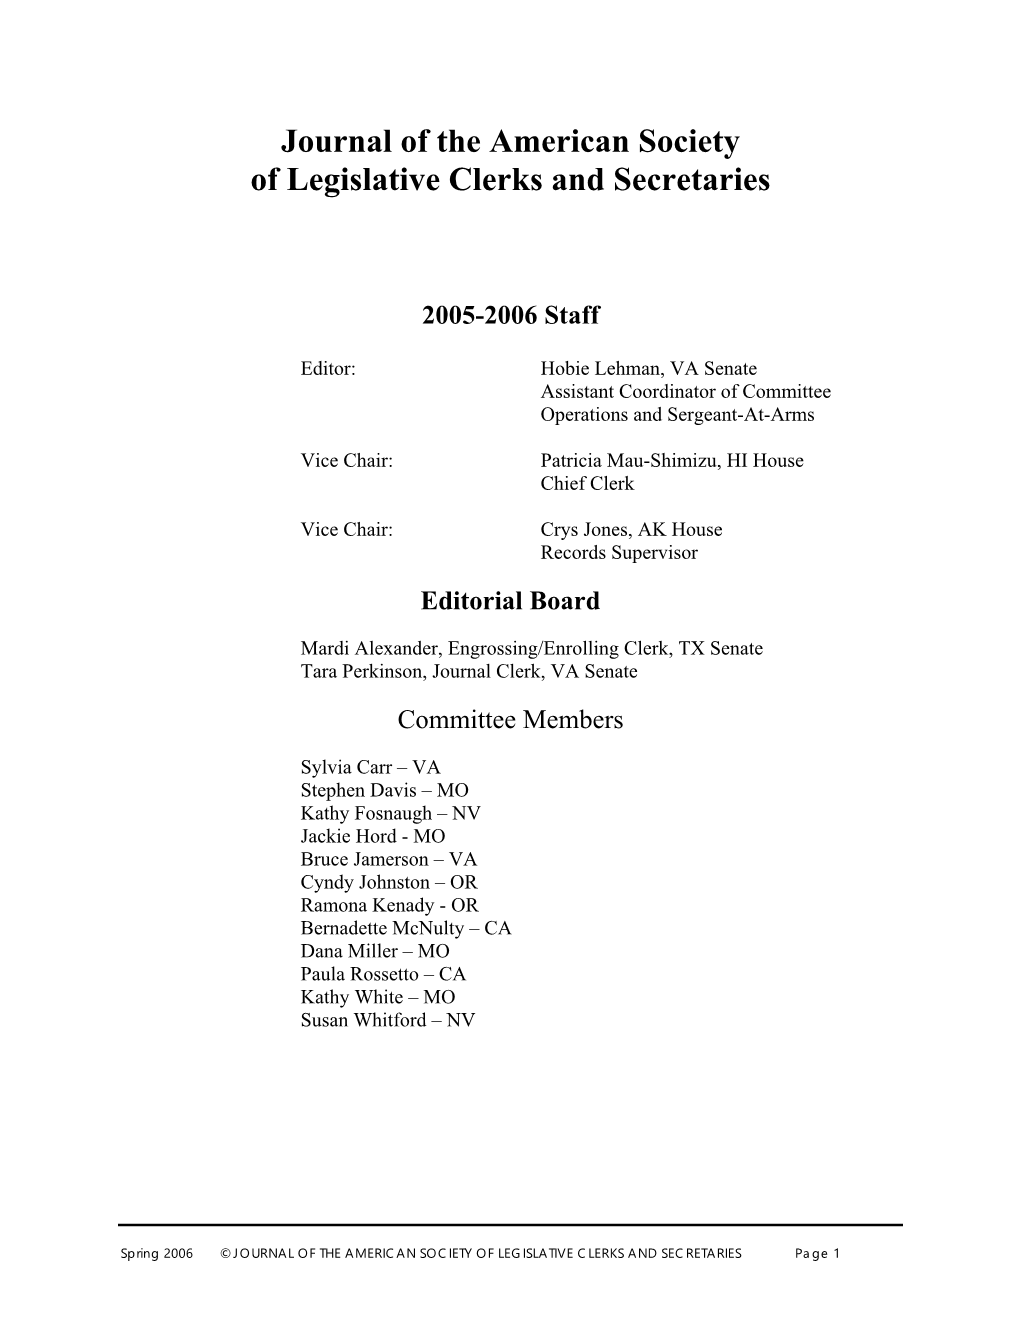 Journal of the American Society of Legislative Clerks and Secretaries